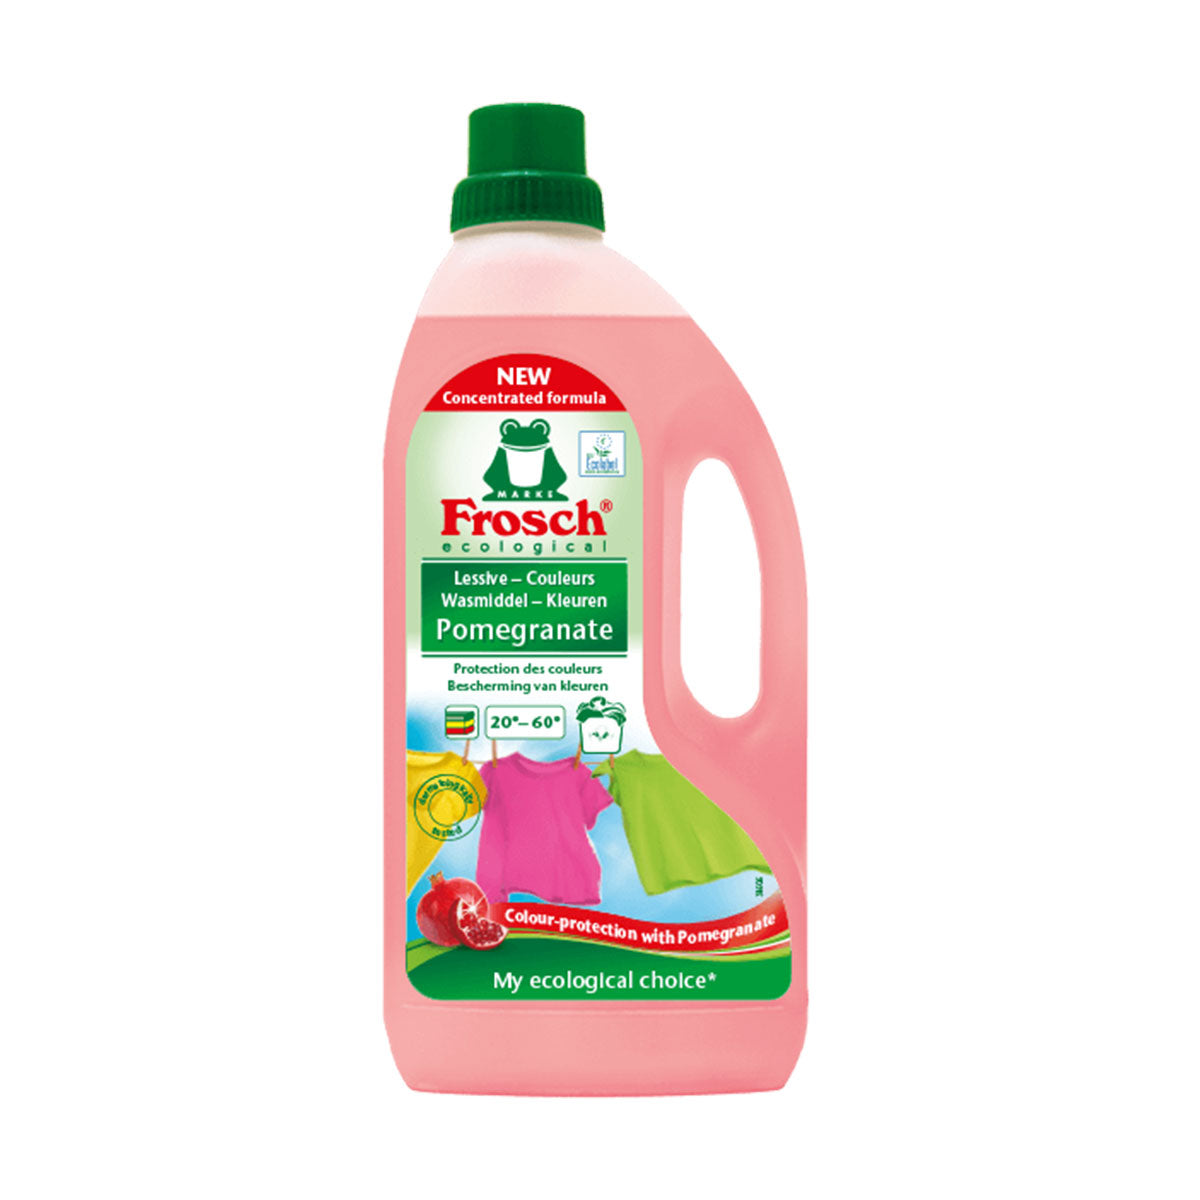 Detergente líquido Pomelo Frosch 1,5 lts - Producto Ecológico